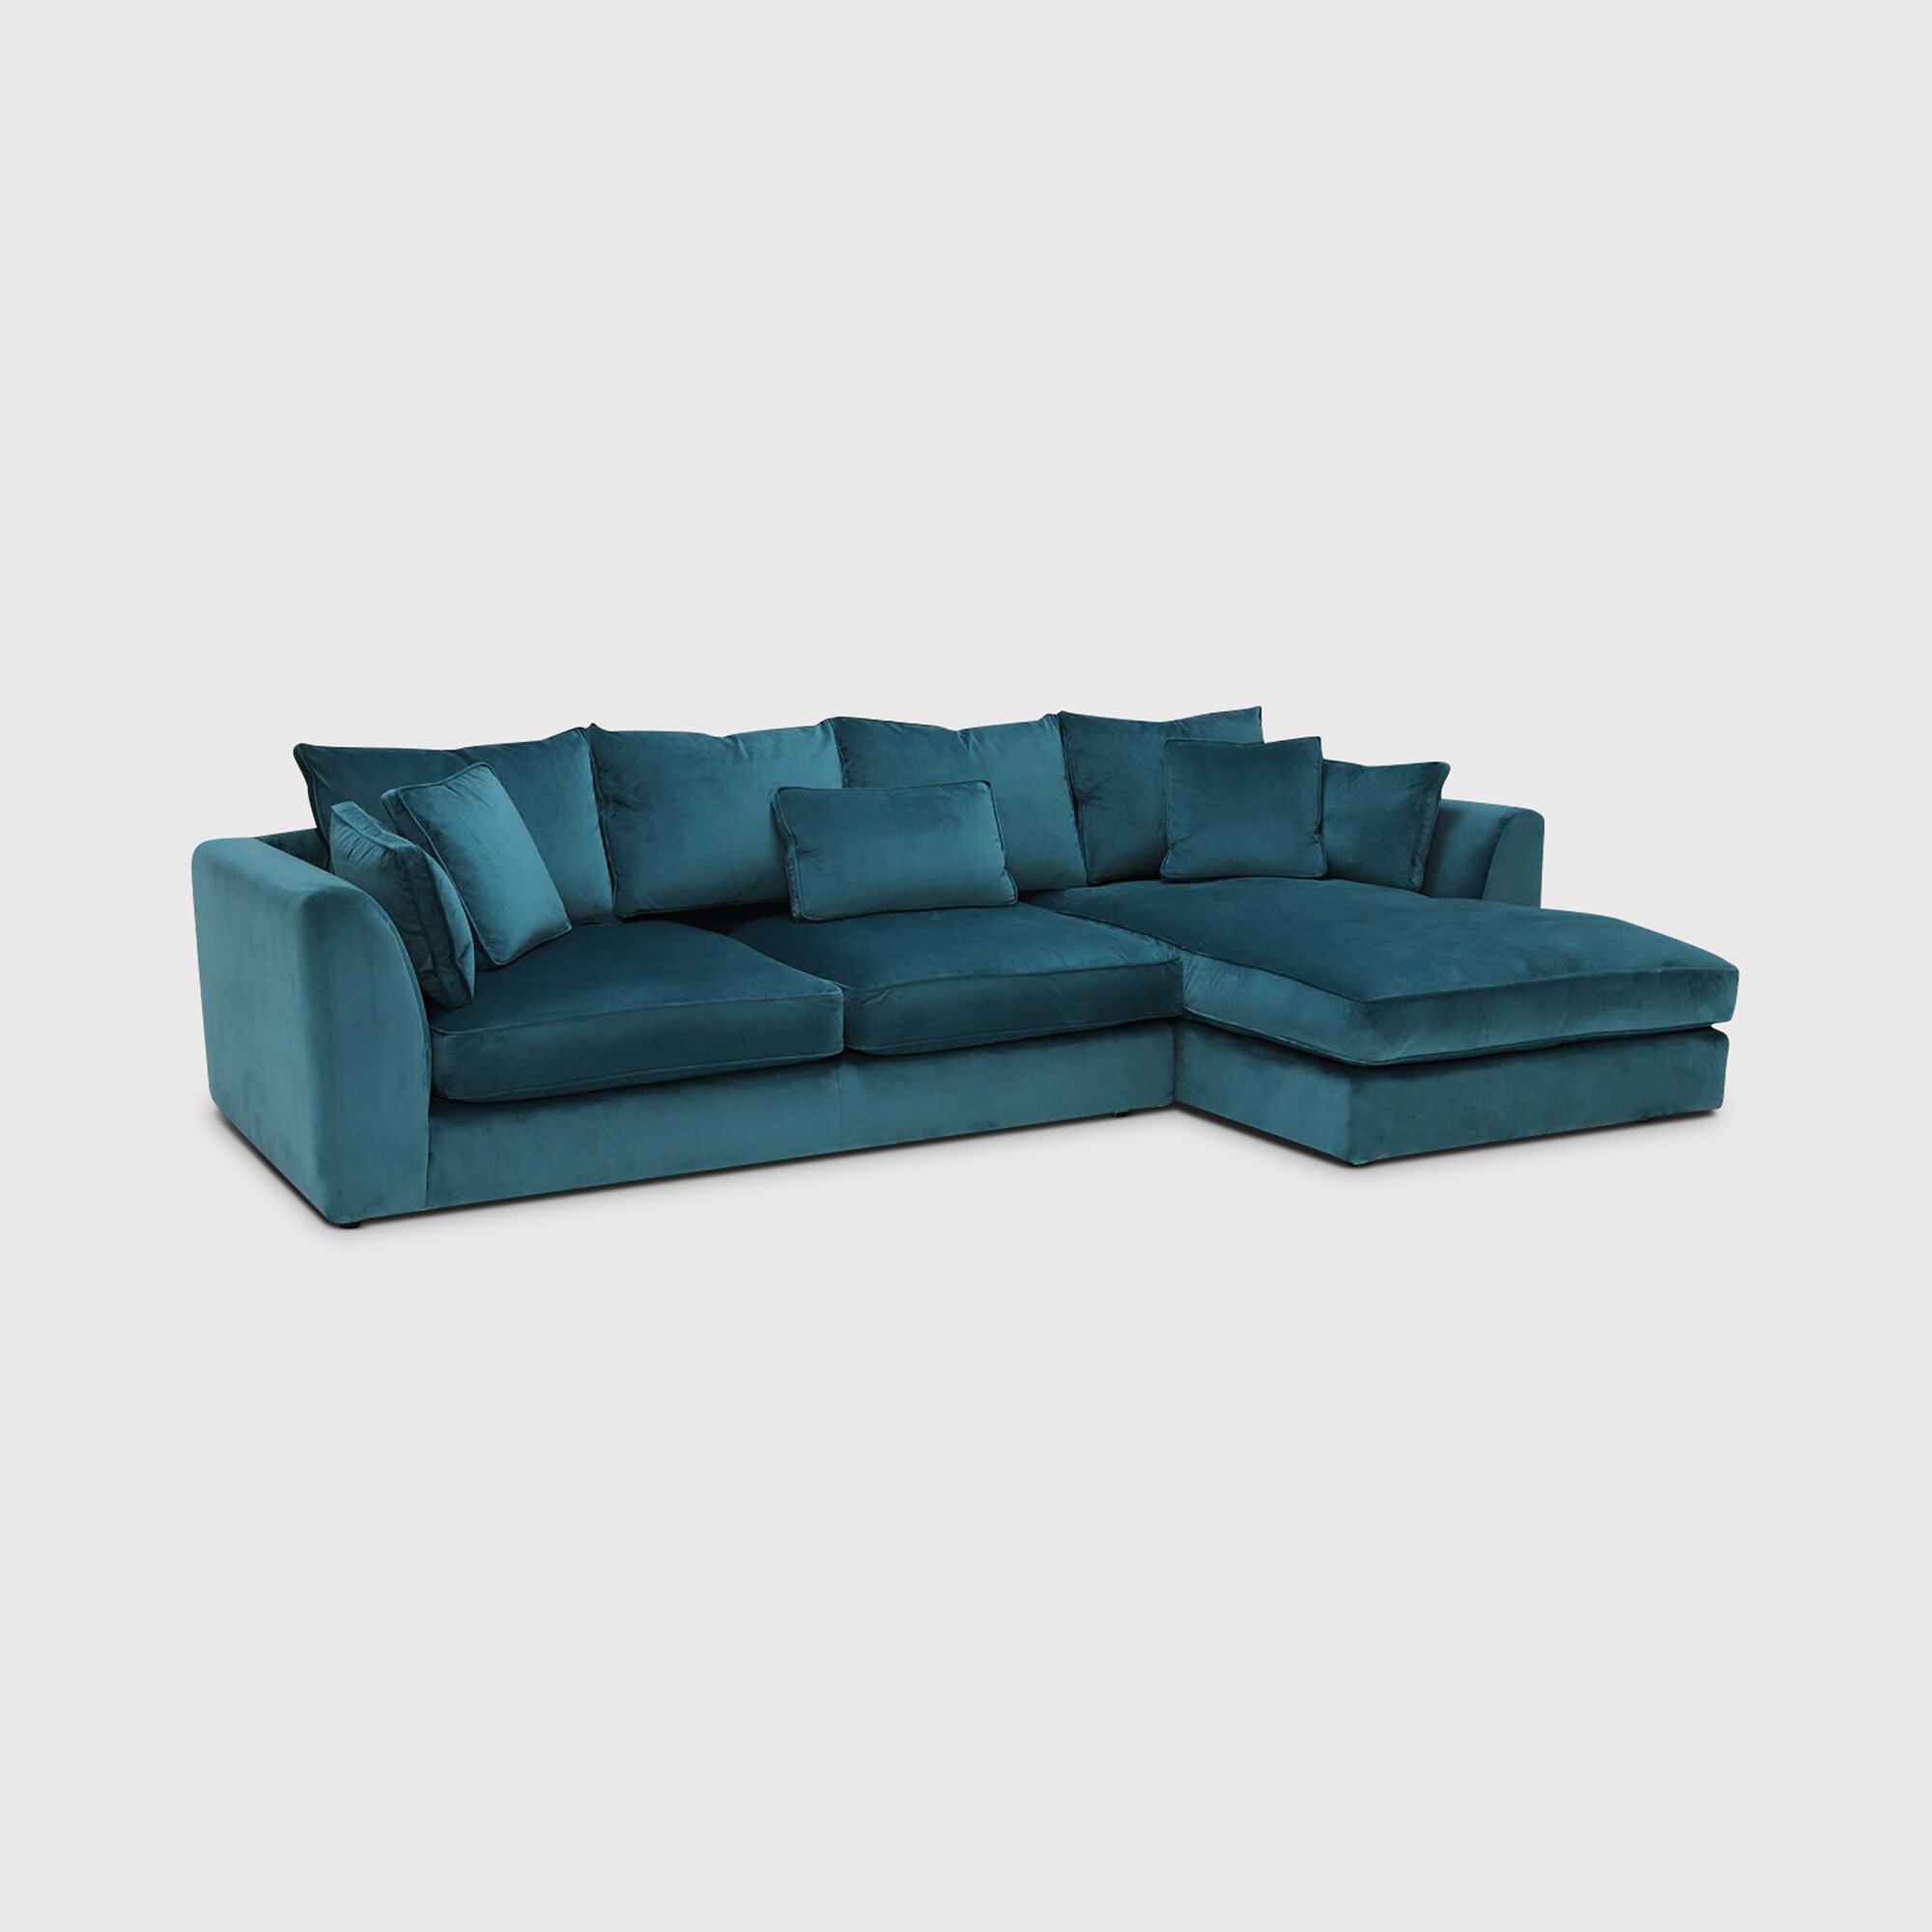 Harrington Large Chaise Sofa Right, Teal Fabric | Barker & Stonehouse